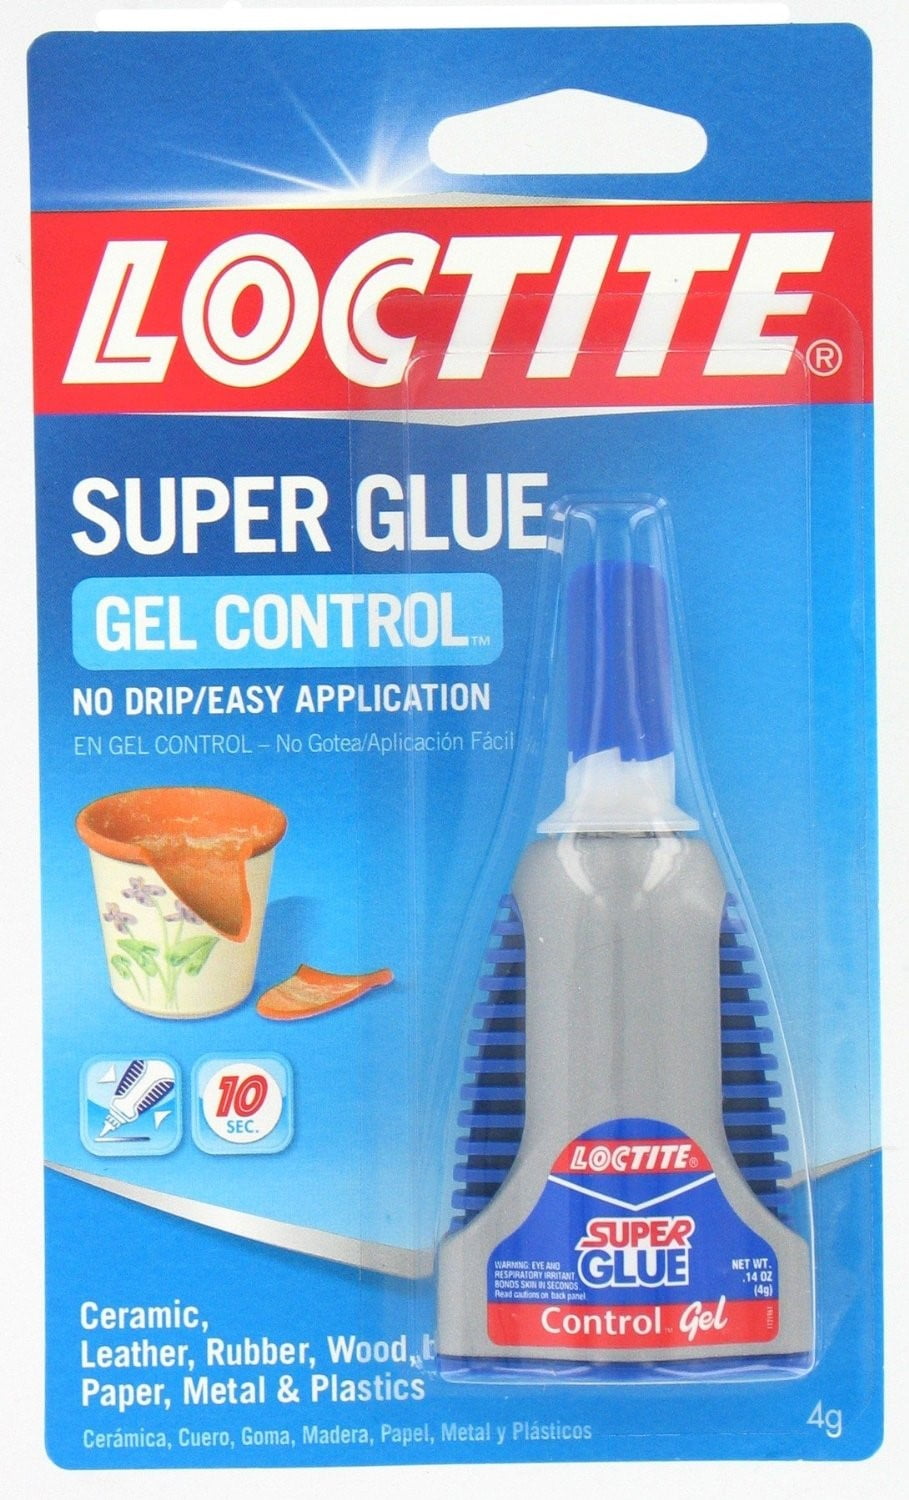  Loctite Super Glue Ultra Gel Control, Clear Superglue,  Cyanoacrylate Adhesive Instant Glue, Quick Dry - 0.14 fl oz Bottle, Pack of  1